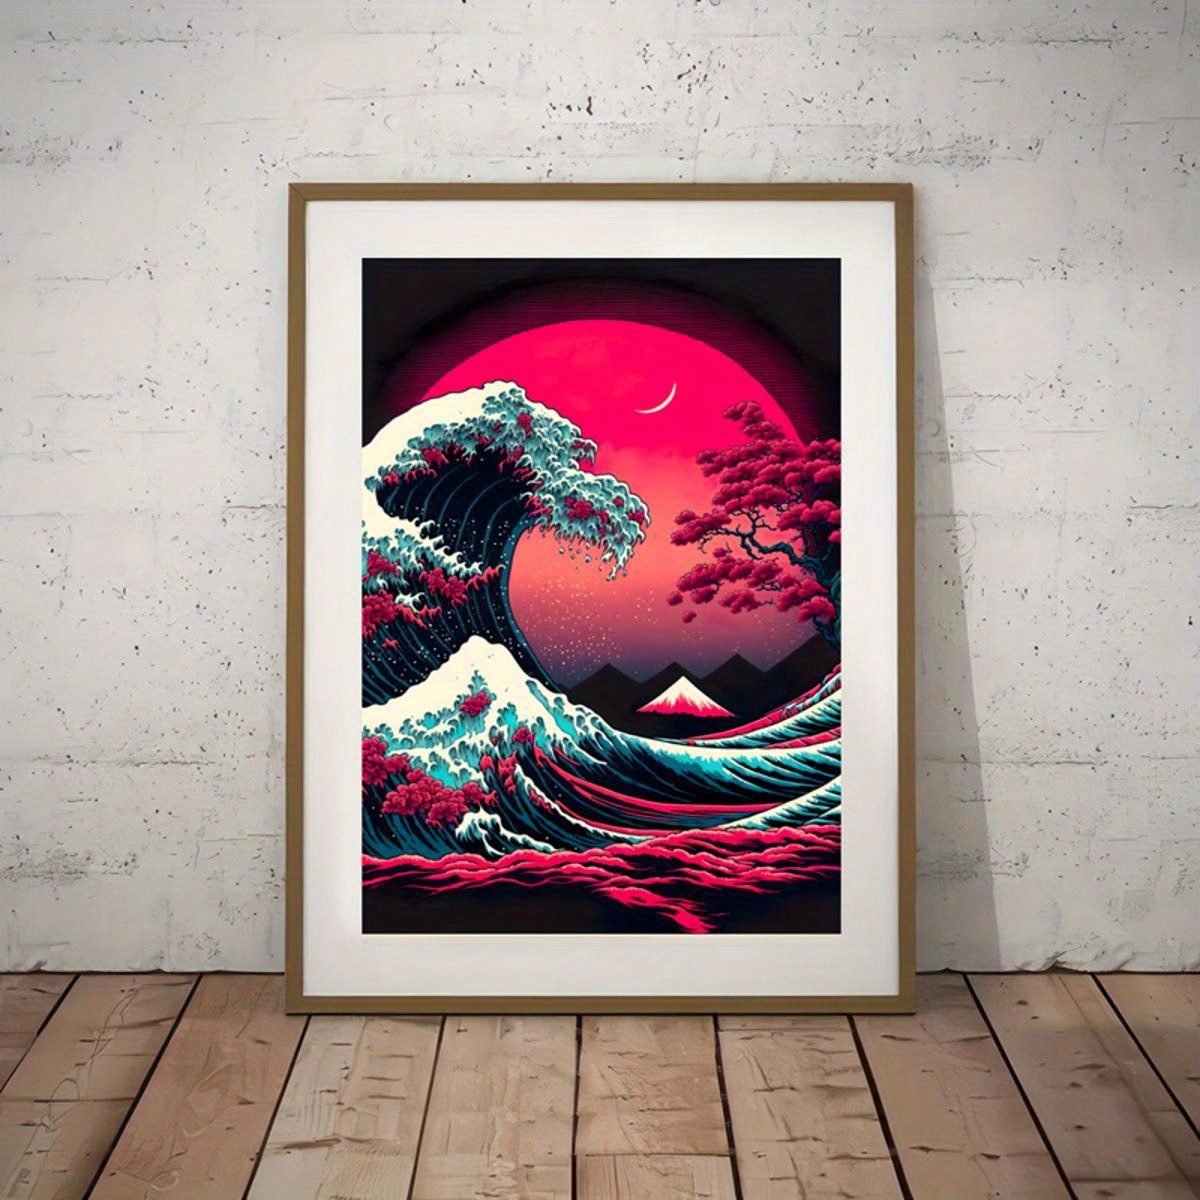 The Great Wave Poster - Kanagawa Wave Wall Art of Hokusai, Japanese Poster  , Canvas Prints & Wall Art Wave, Japanese Poster for Home Decor & Office  Decor, Seascape Artwork & Great